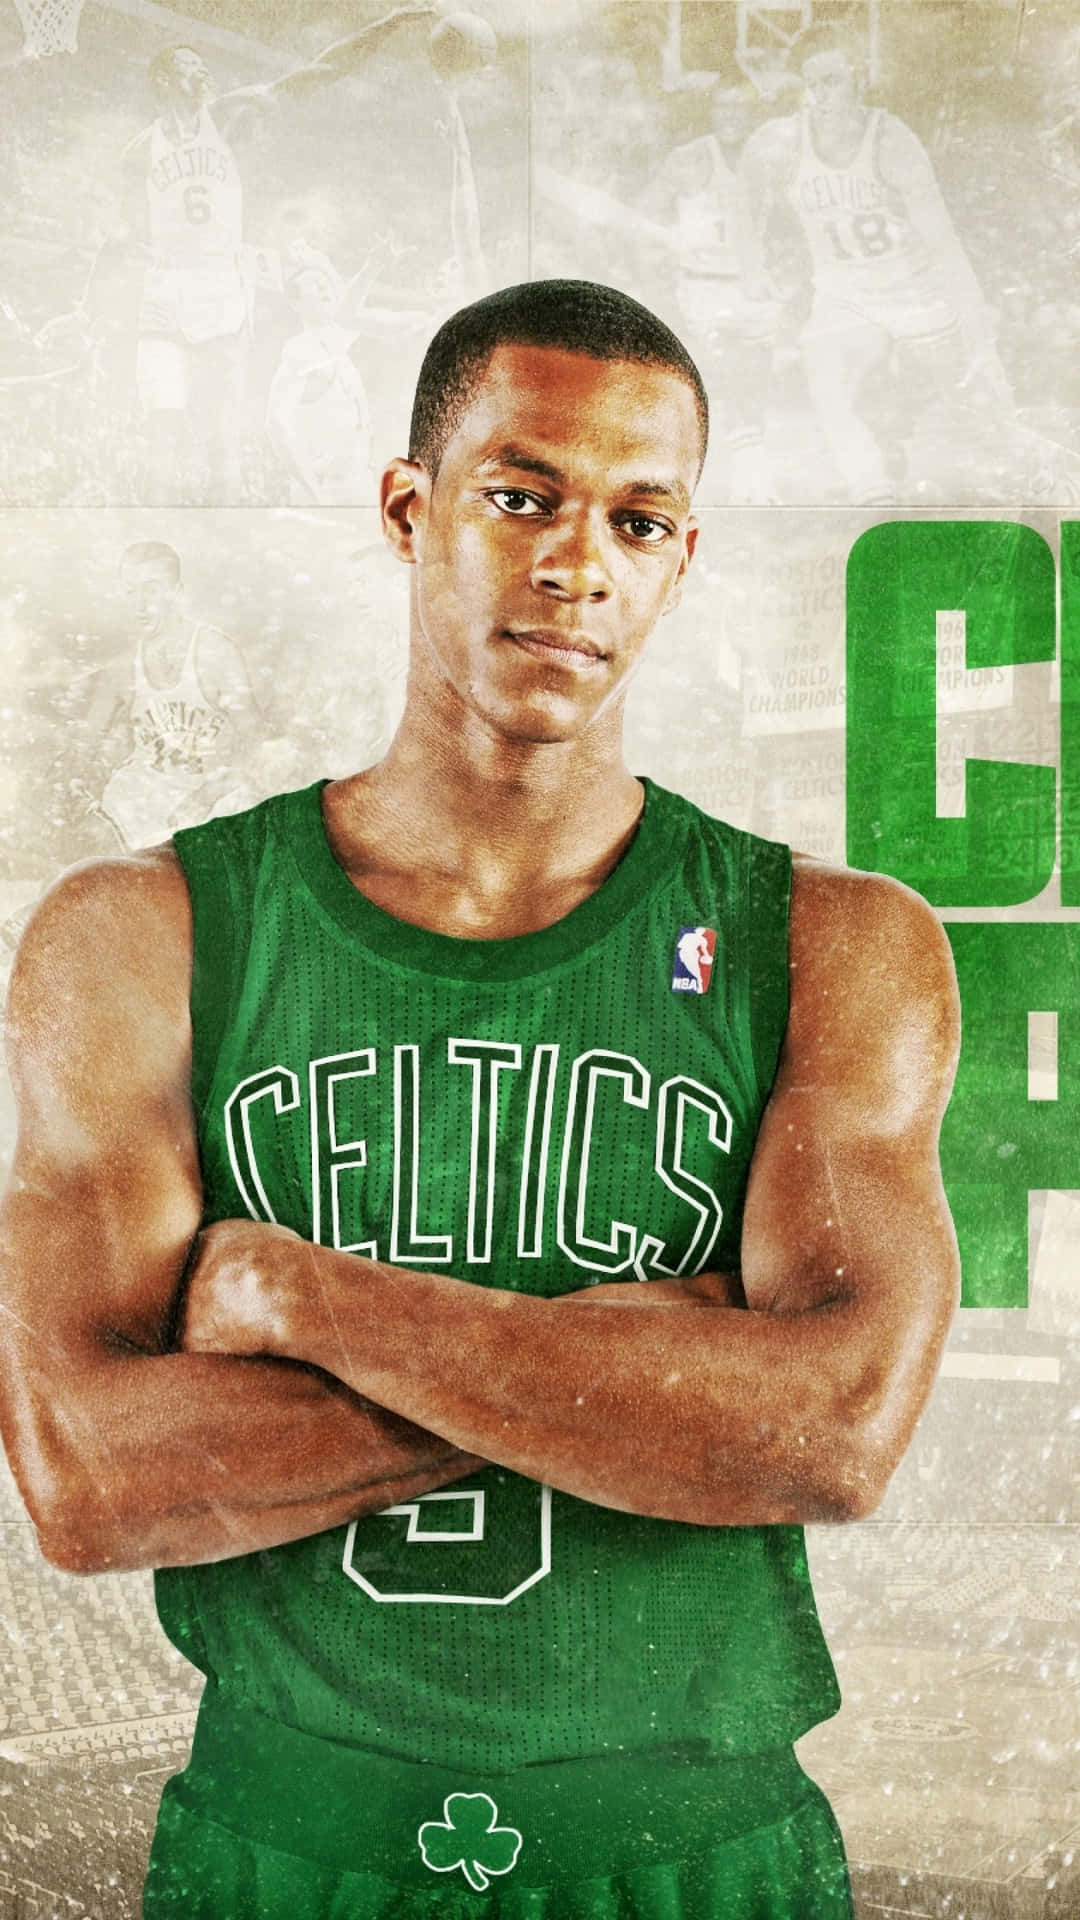 Download Image Celebrating Celtics Championship Glory